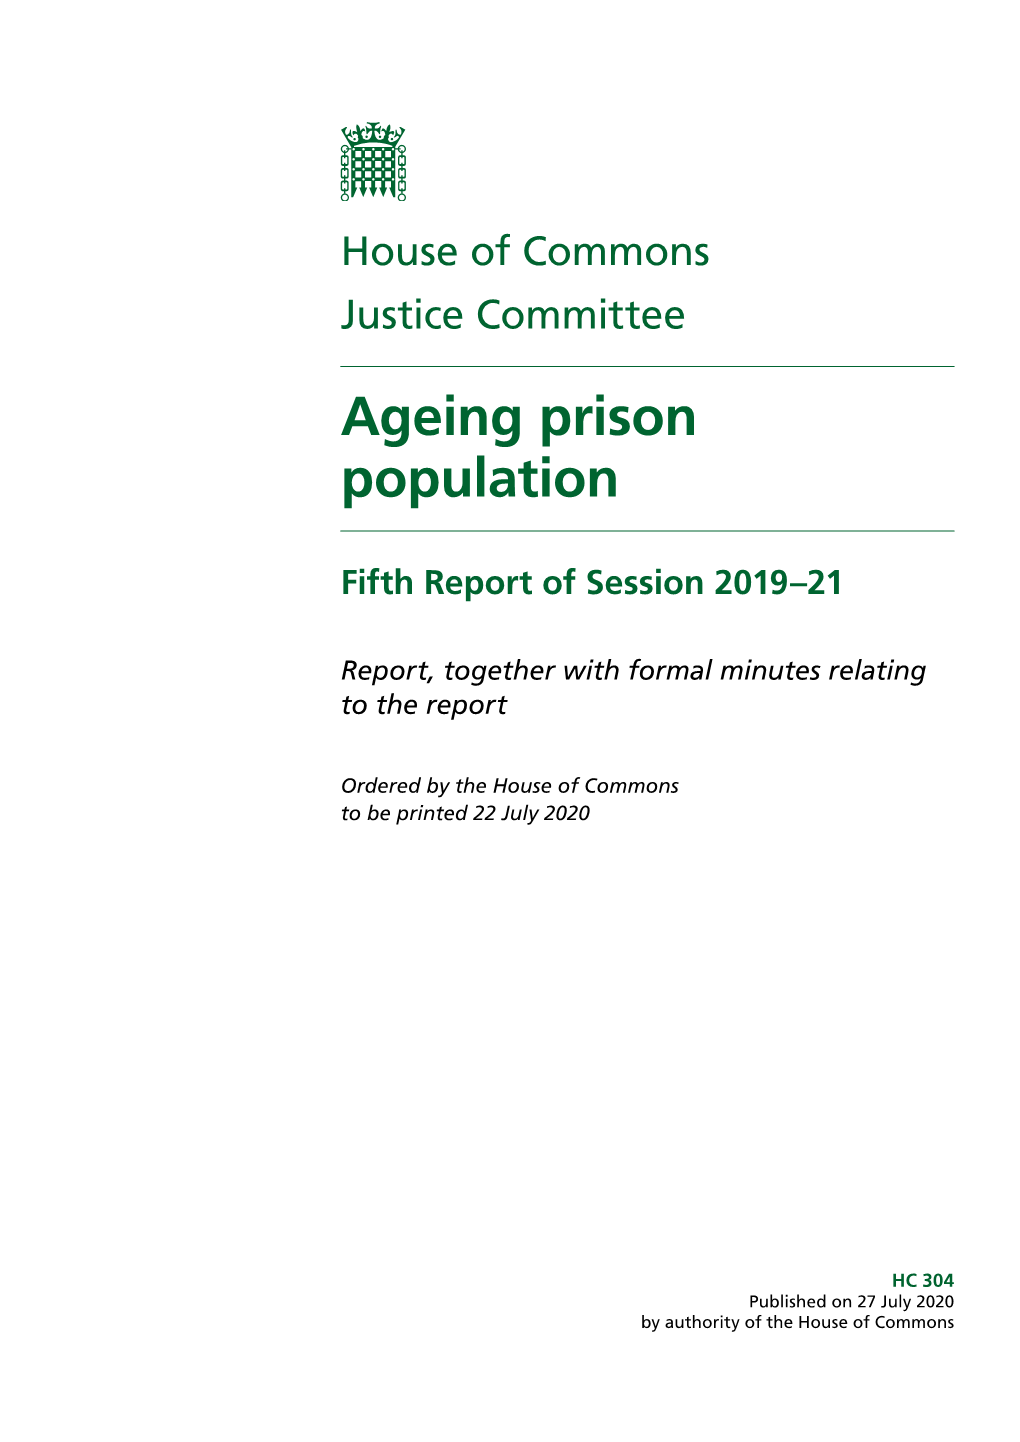 Ageing Prison Population